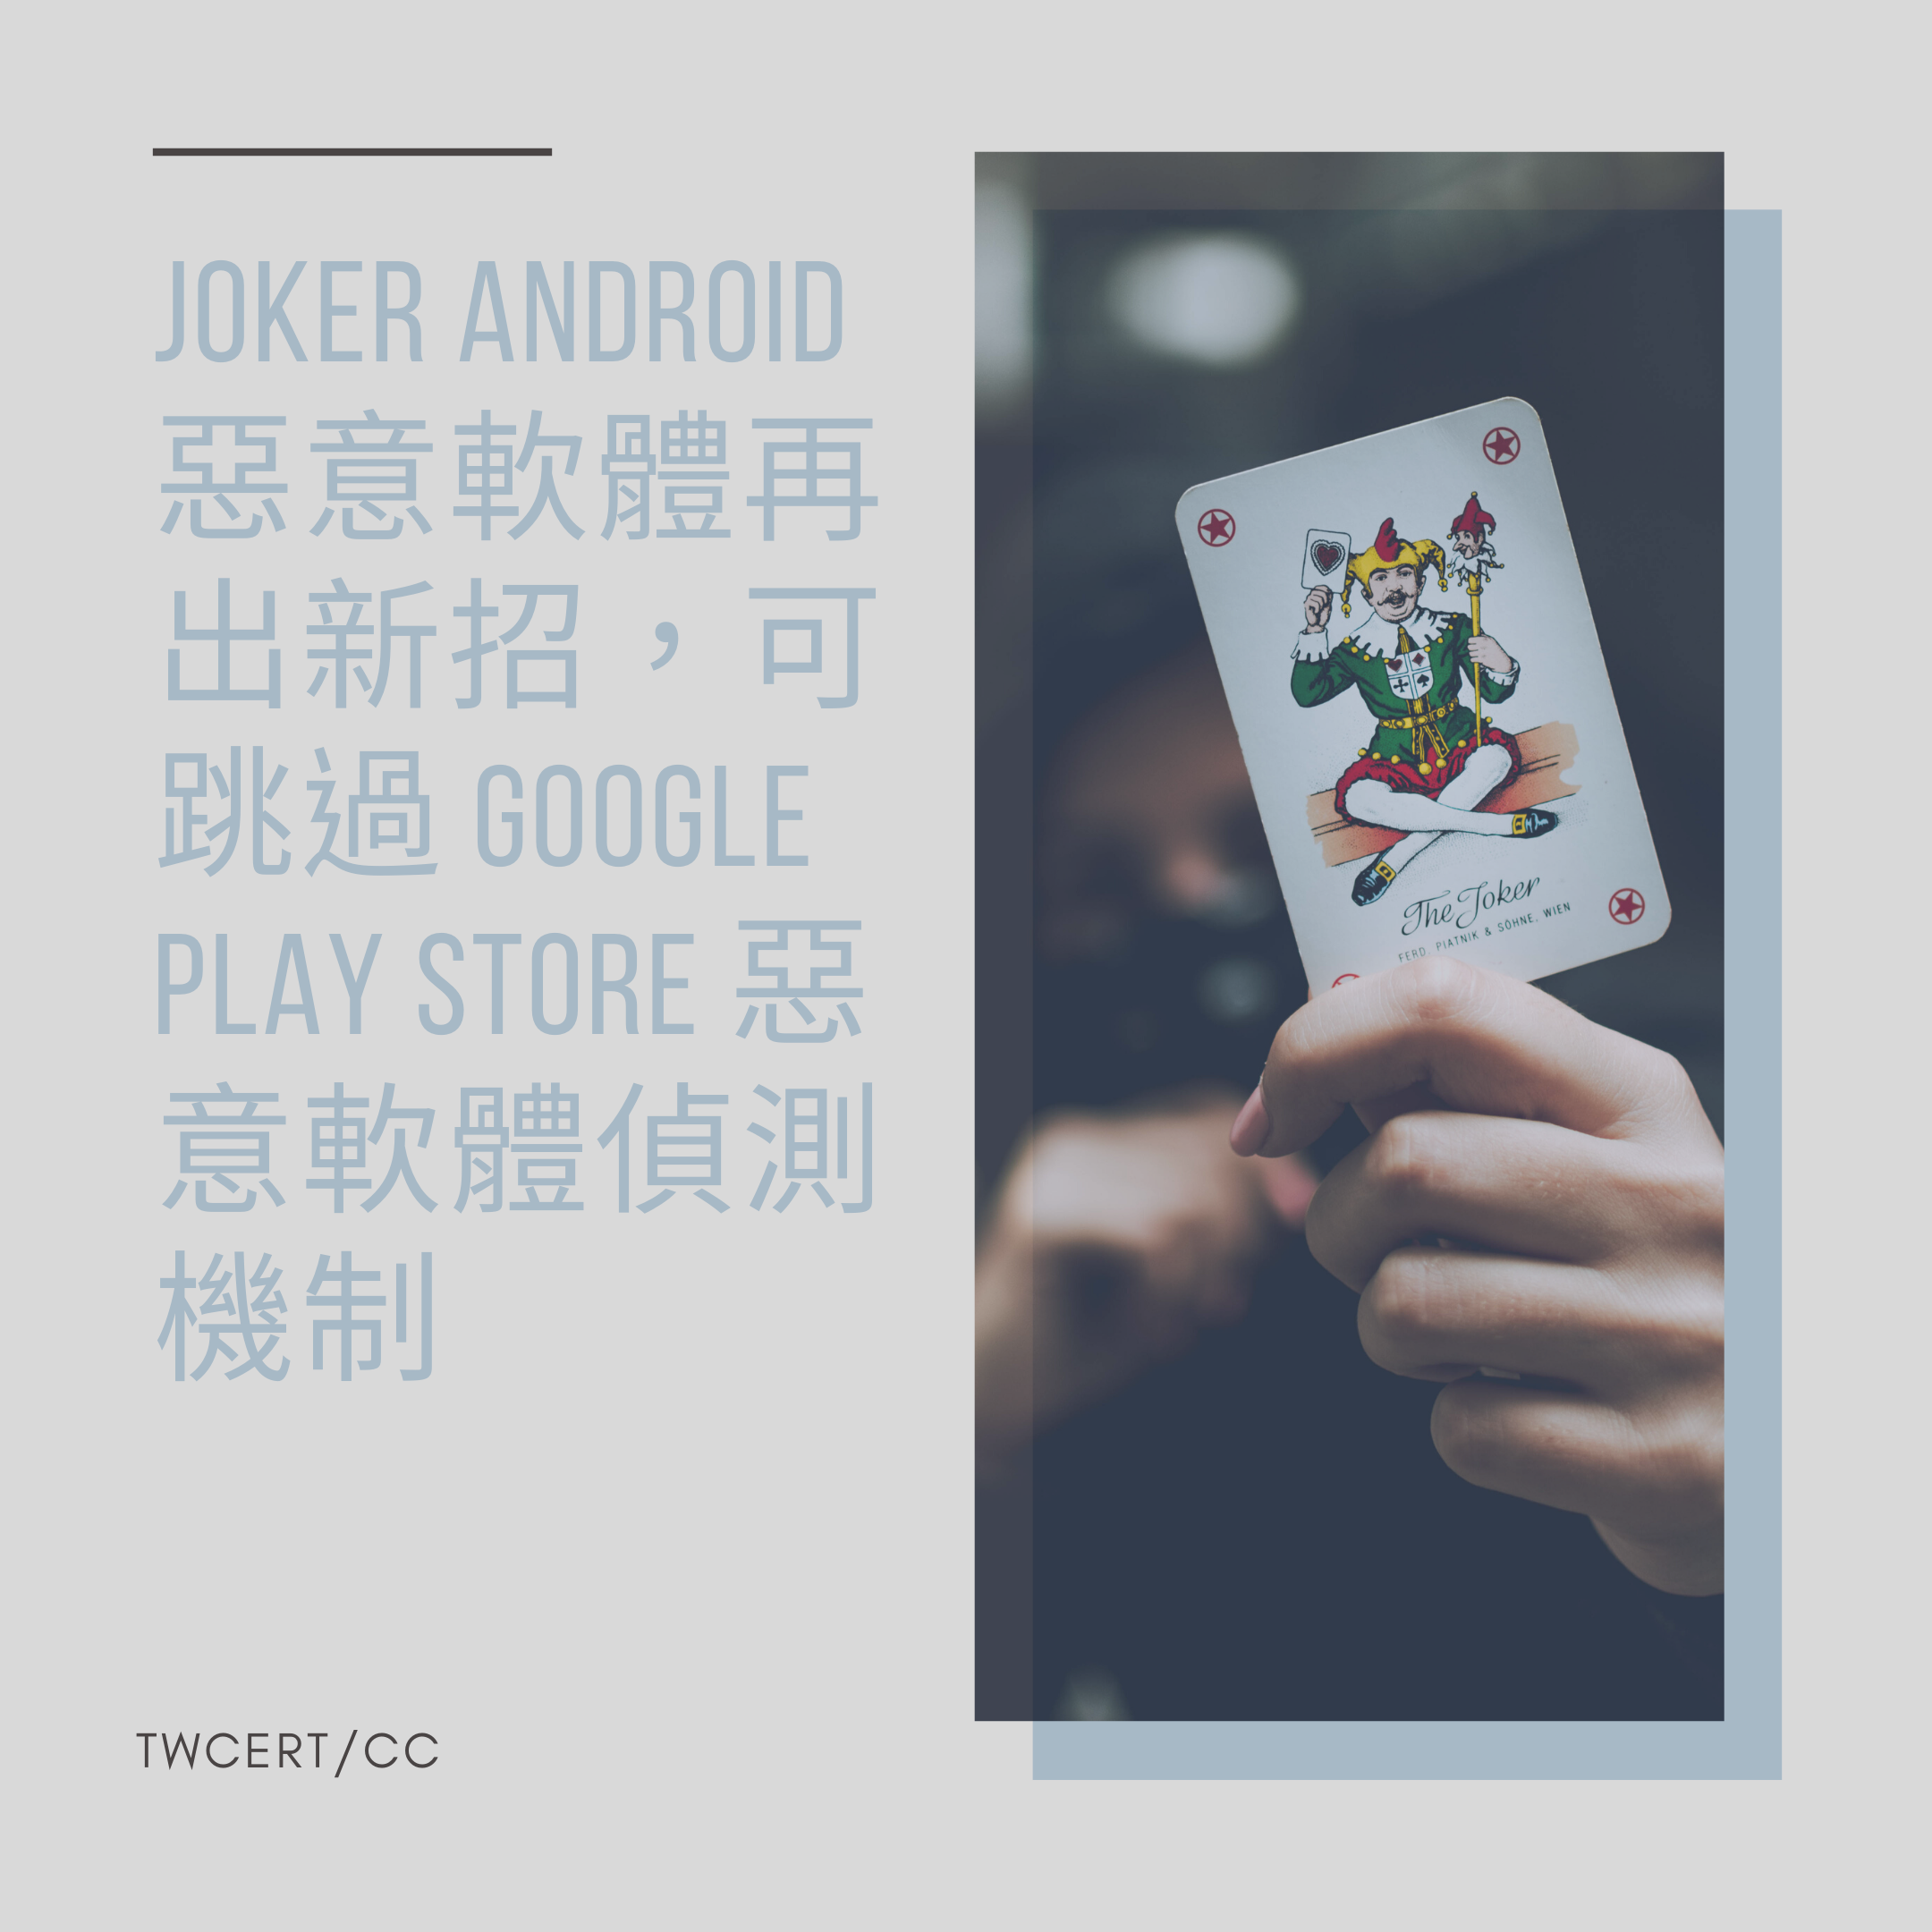 Joker Android 惡意軟體再出新招，可跳過 Google Play Store 惡意軟體偵測機制 TWCERT/CC